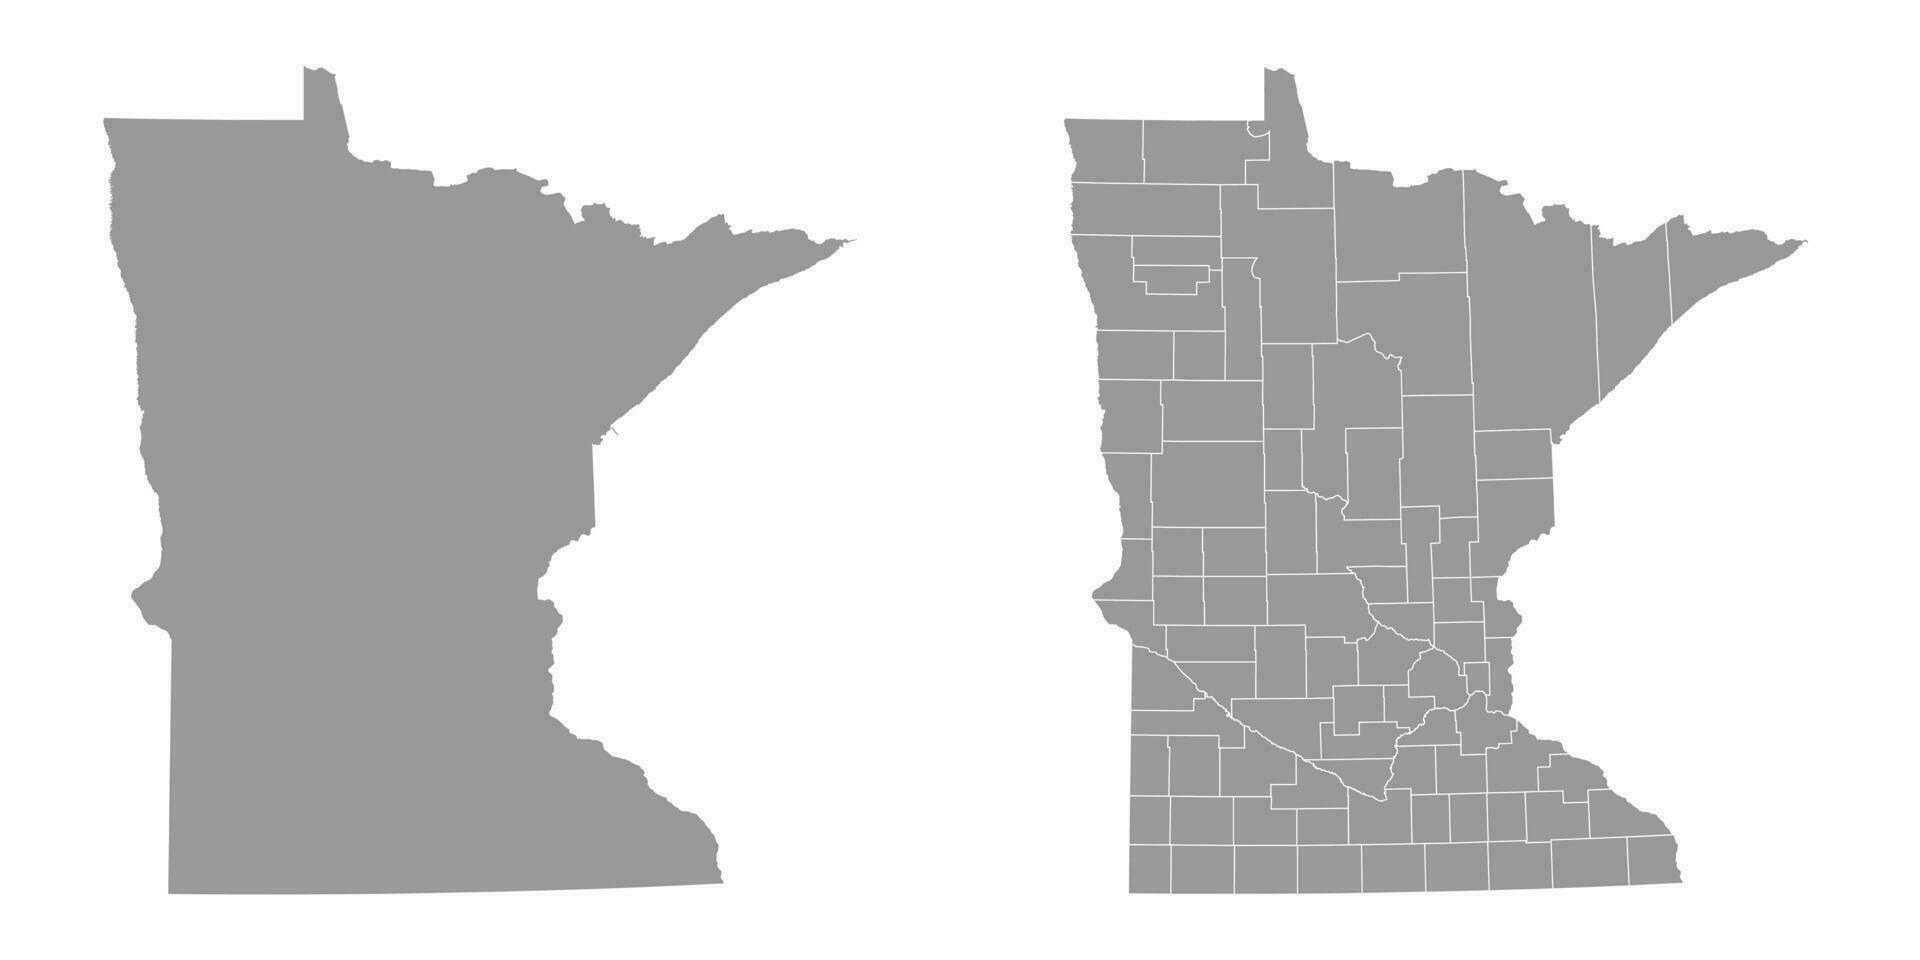 Minnesota state gray maps. Vector illustration.